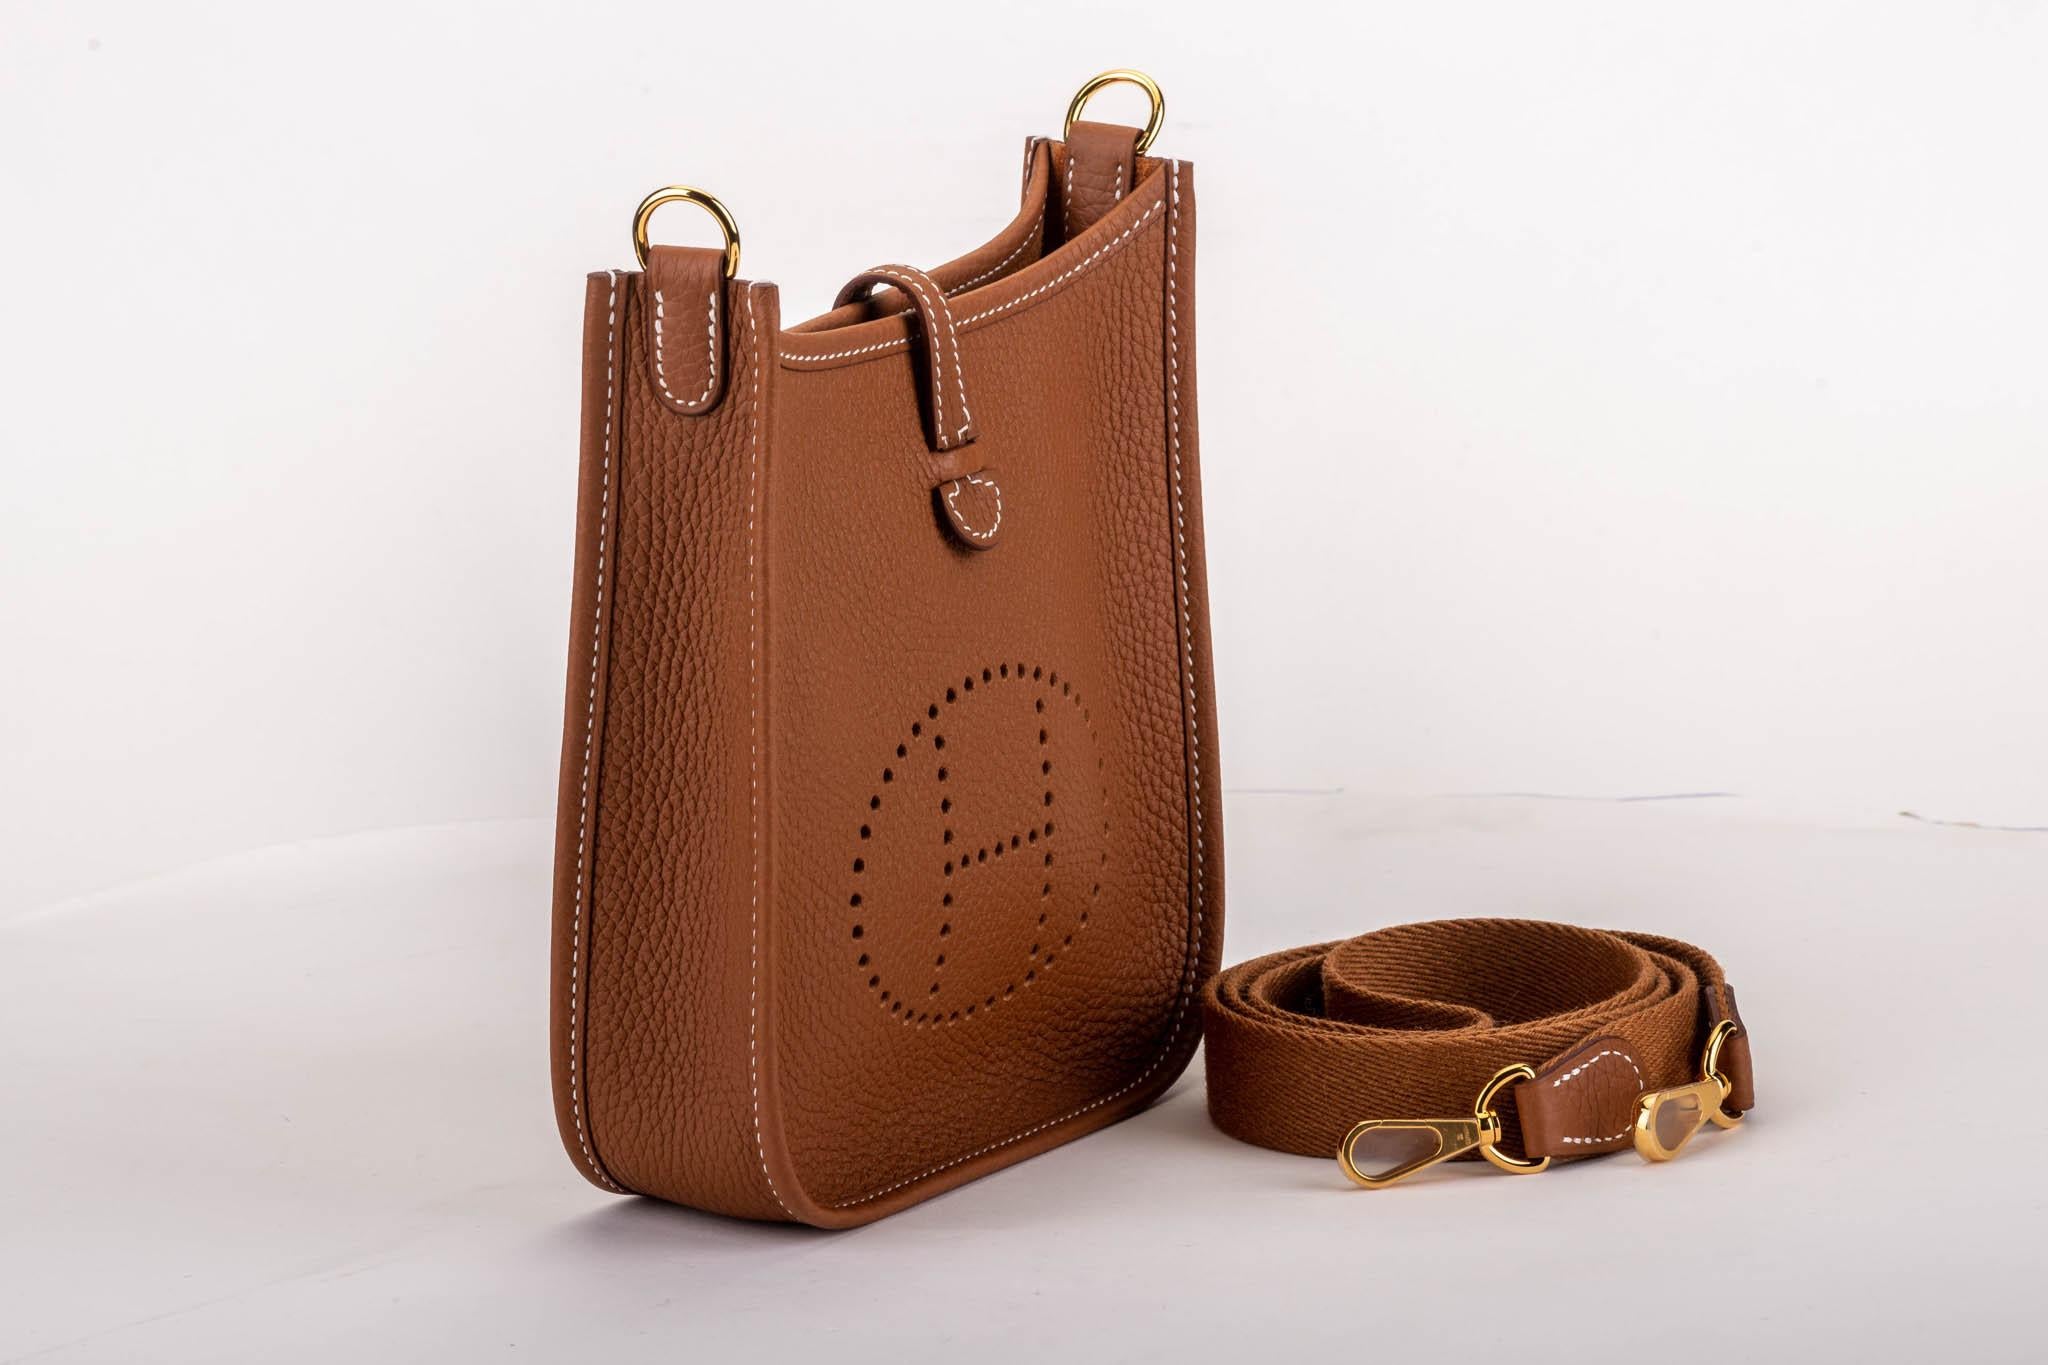 Hermès mini Evelyne bag in gold clemence leather with gold hardware. Shoulder drop, 22.5